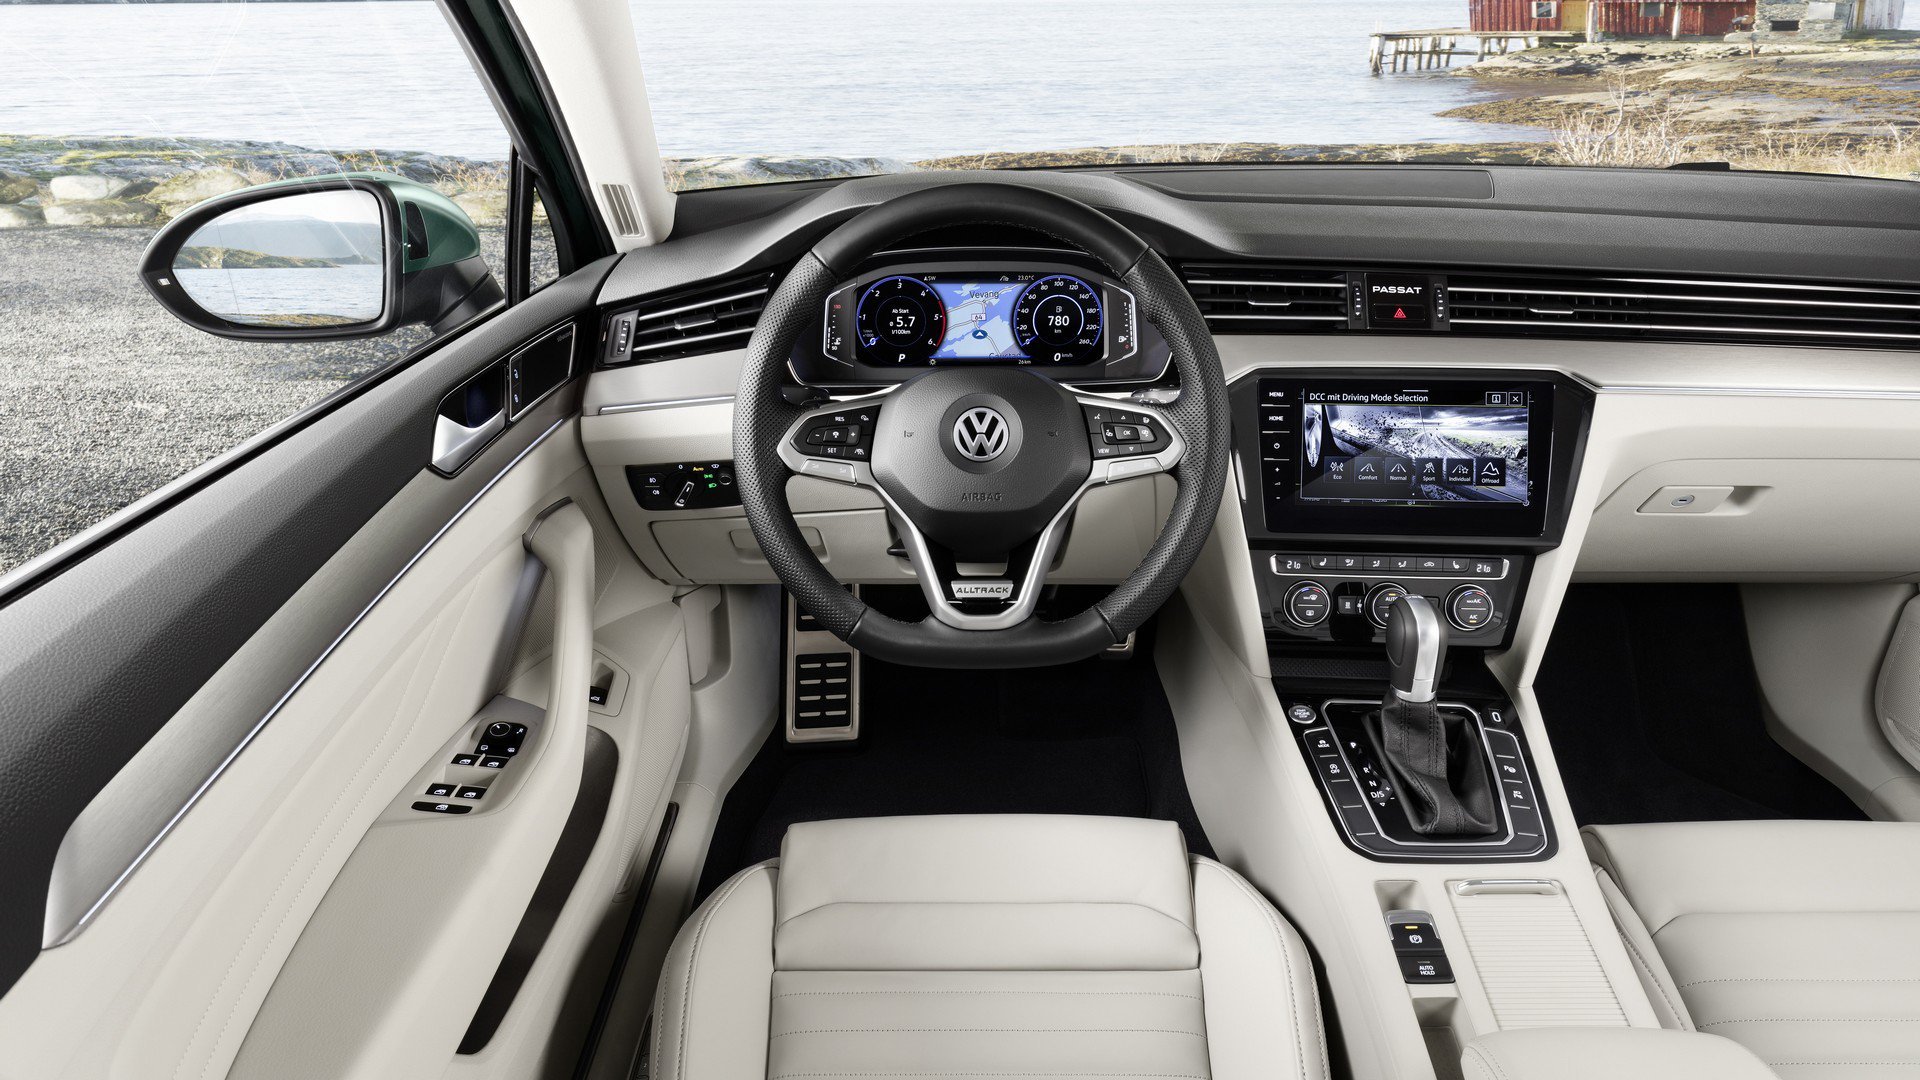 Nuovo volante e sistema infotainment Volkswagen Passat 2019